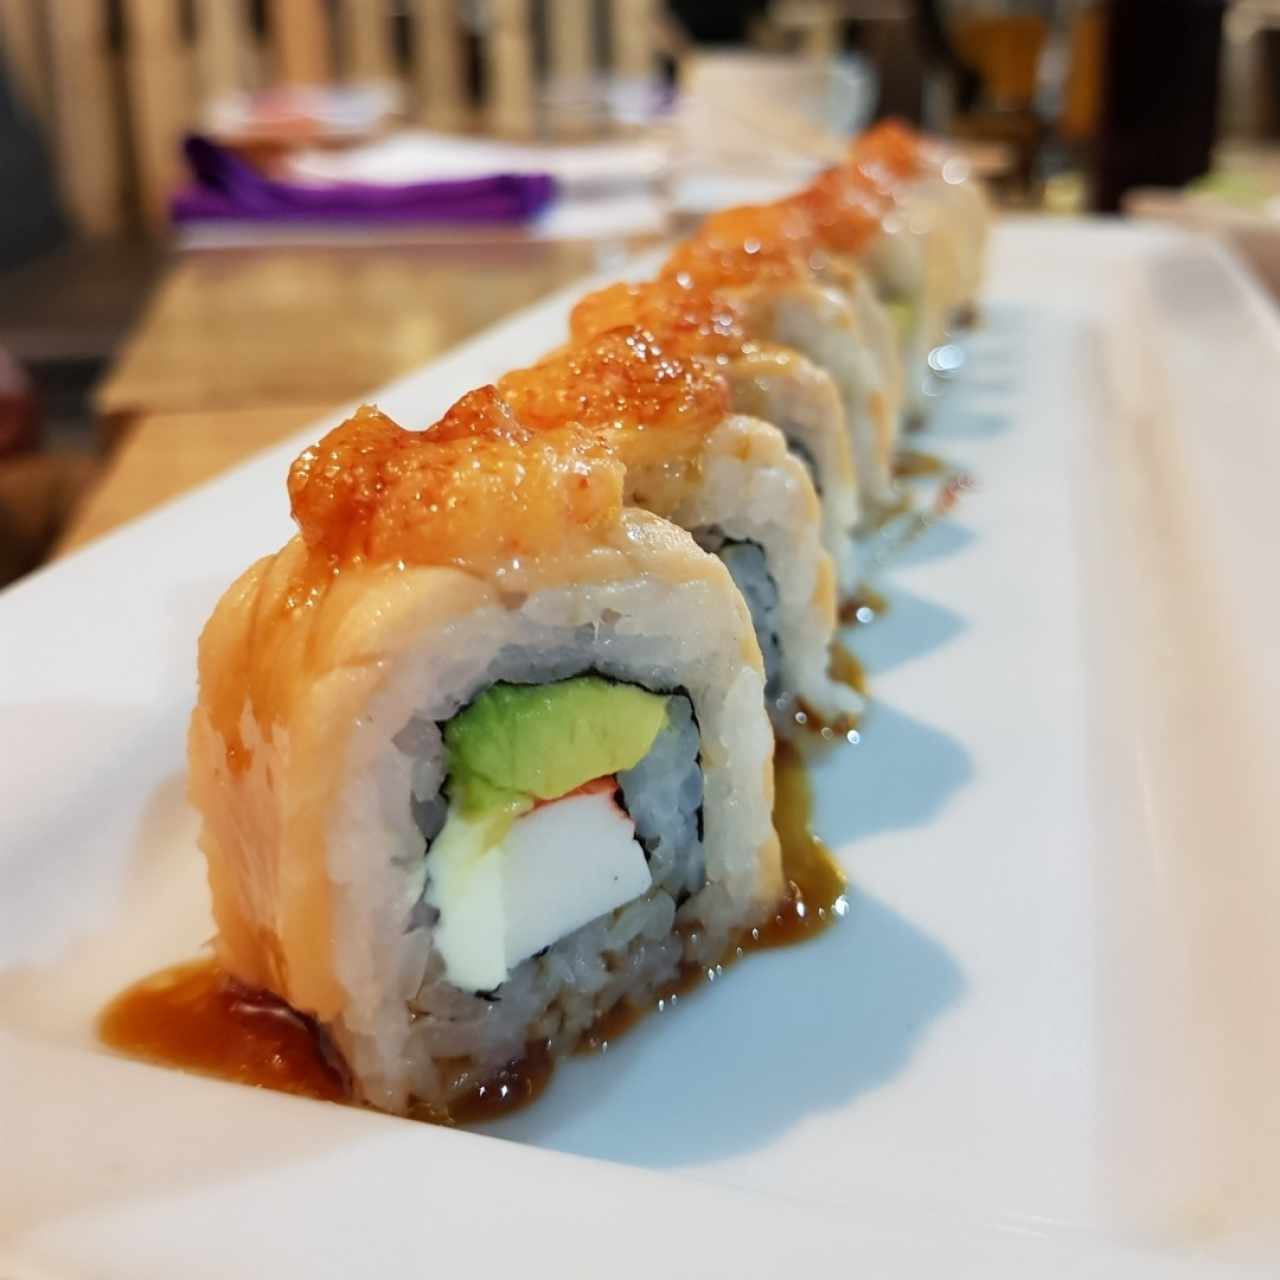 Sushi Itto (Fontabella)